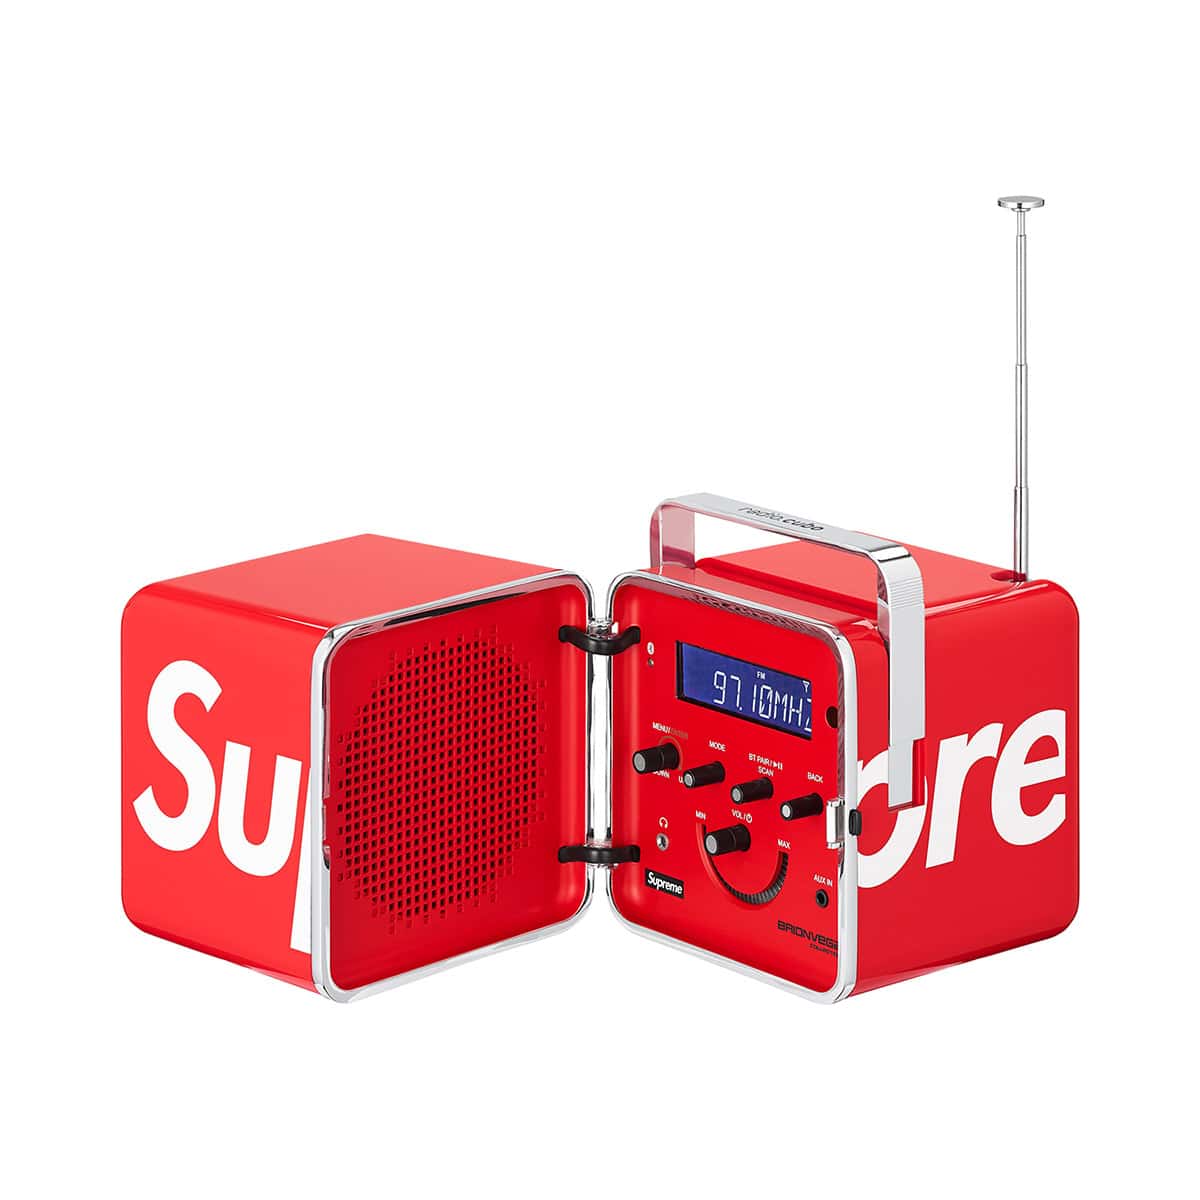 Supreme Brionvega radio cubo